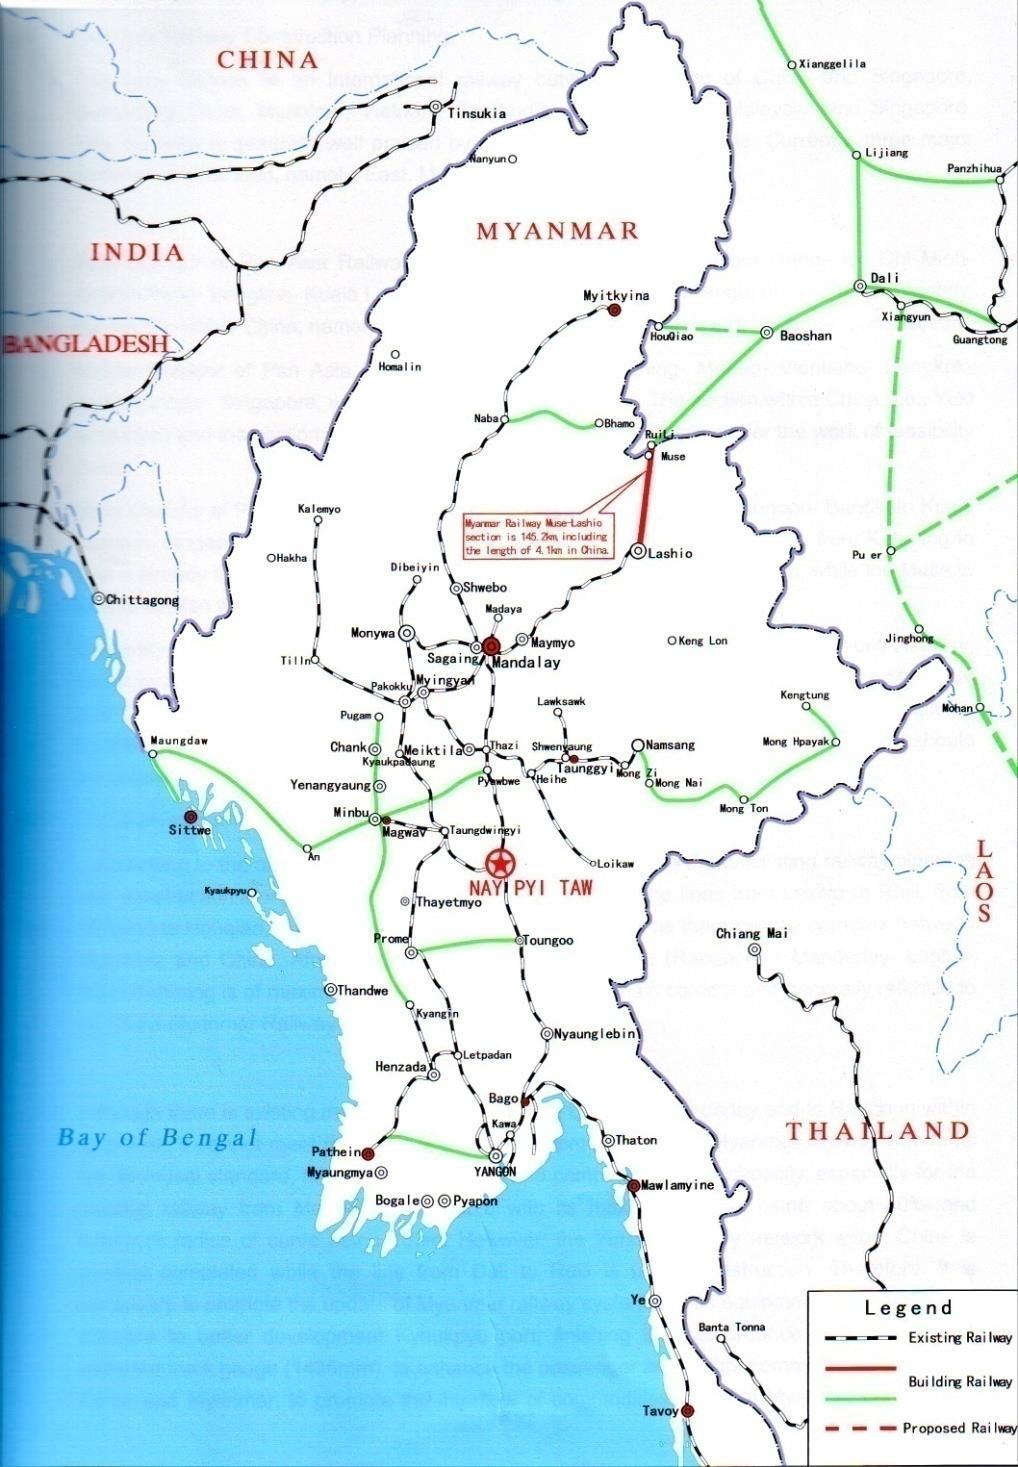 Trans-Asian Railway Network Mandalay-Yangon Mandalay-Lashio [ Muse (border station and break of gauge)-rueli(china)] Kalay-[ Tamu (border station and